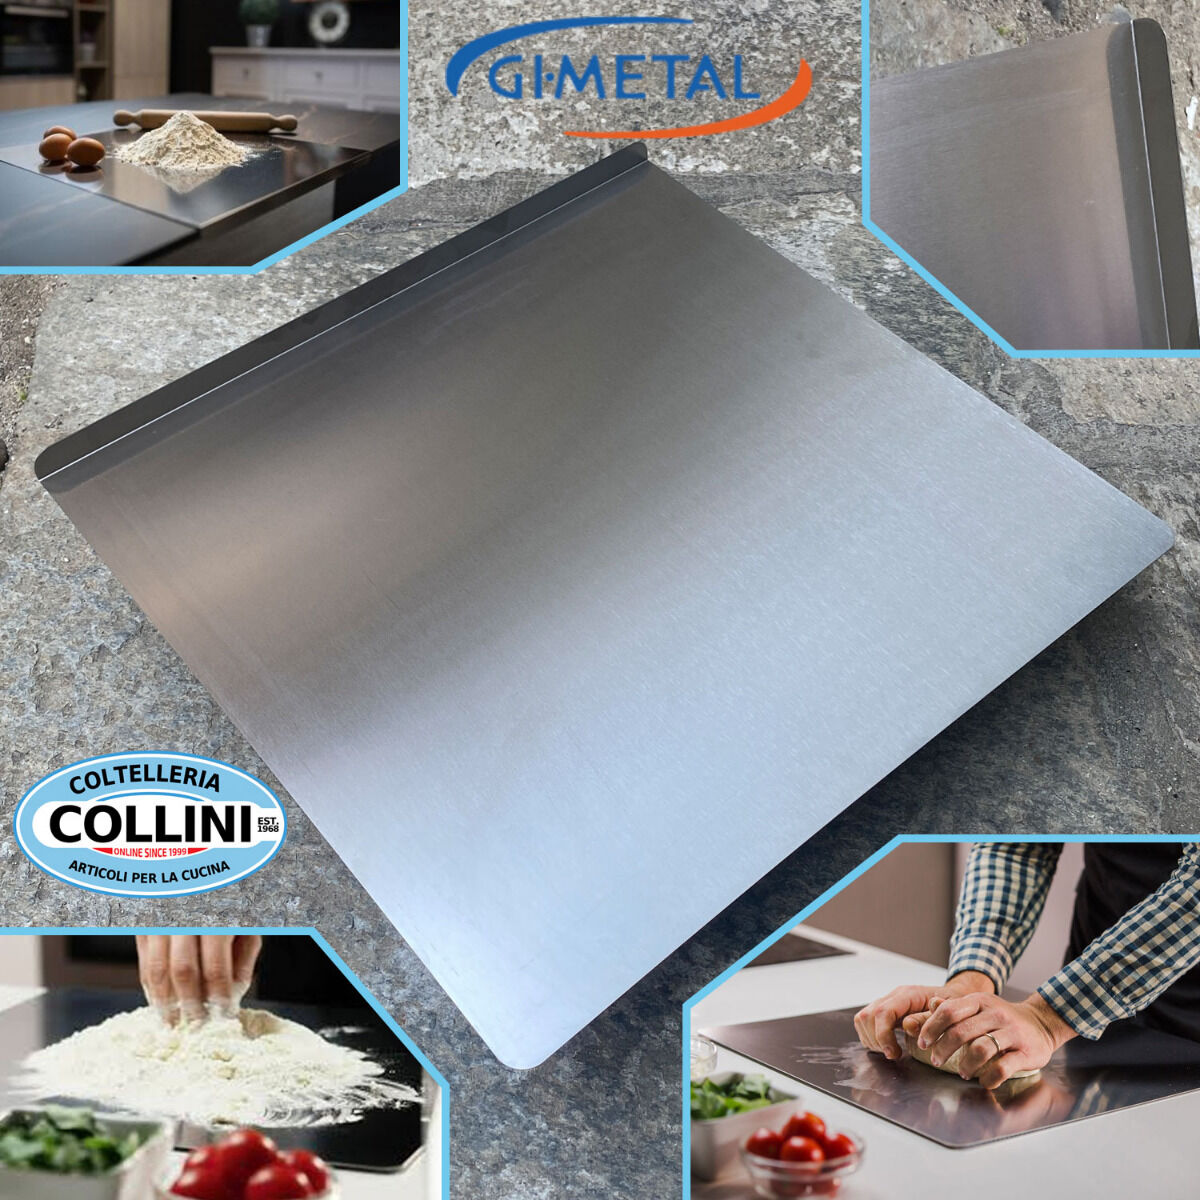 GI.METAL - Non-slip steel cutting board with edge - PIZZA E PANE